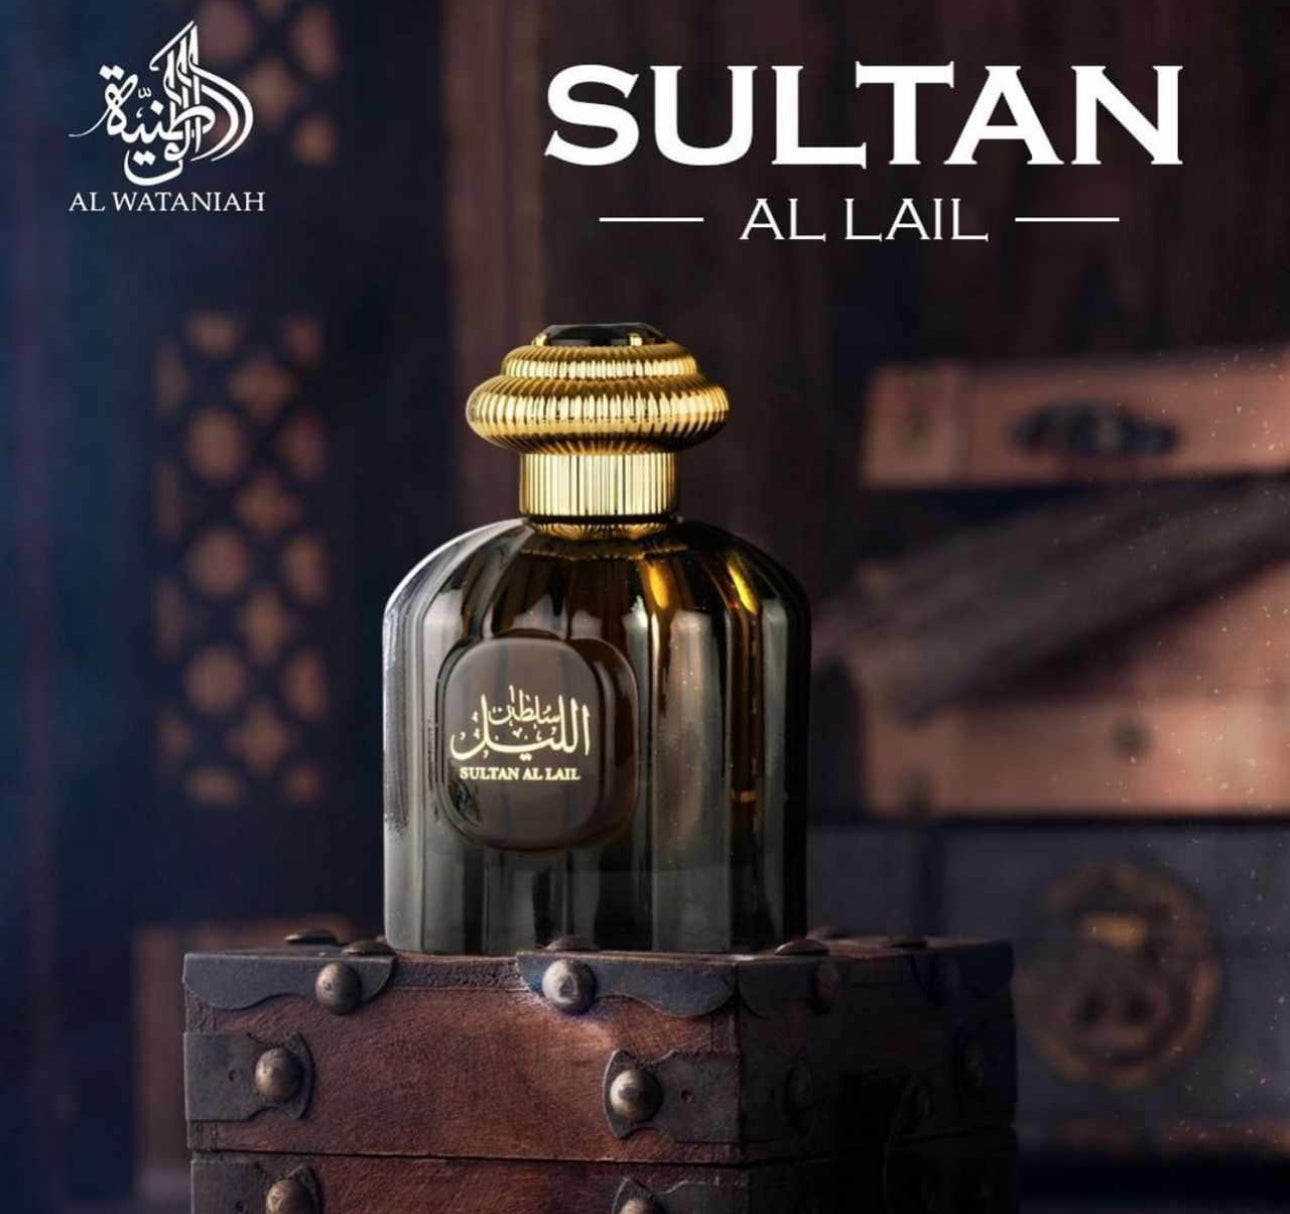 Sultan Al Lail by Alwataniah